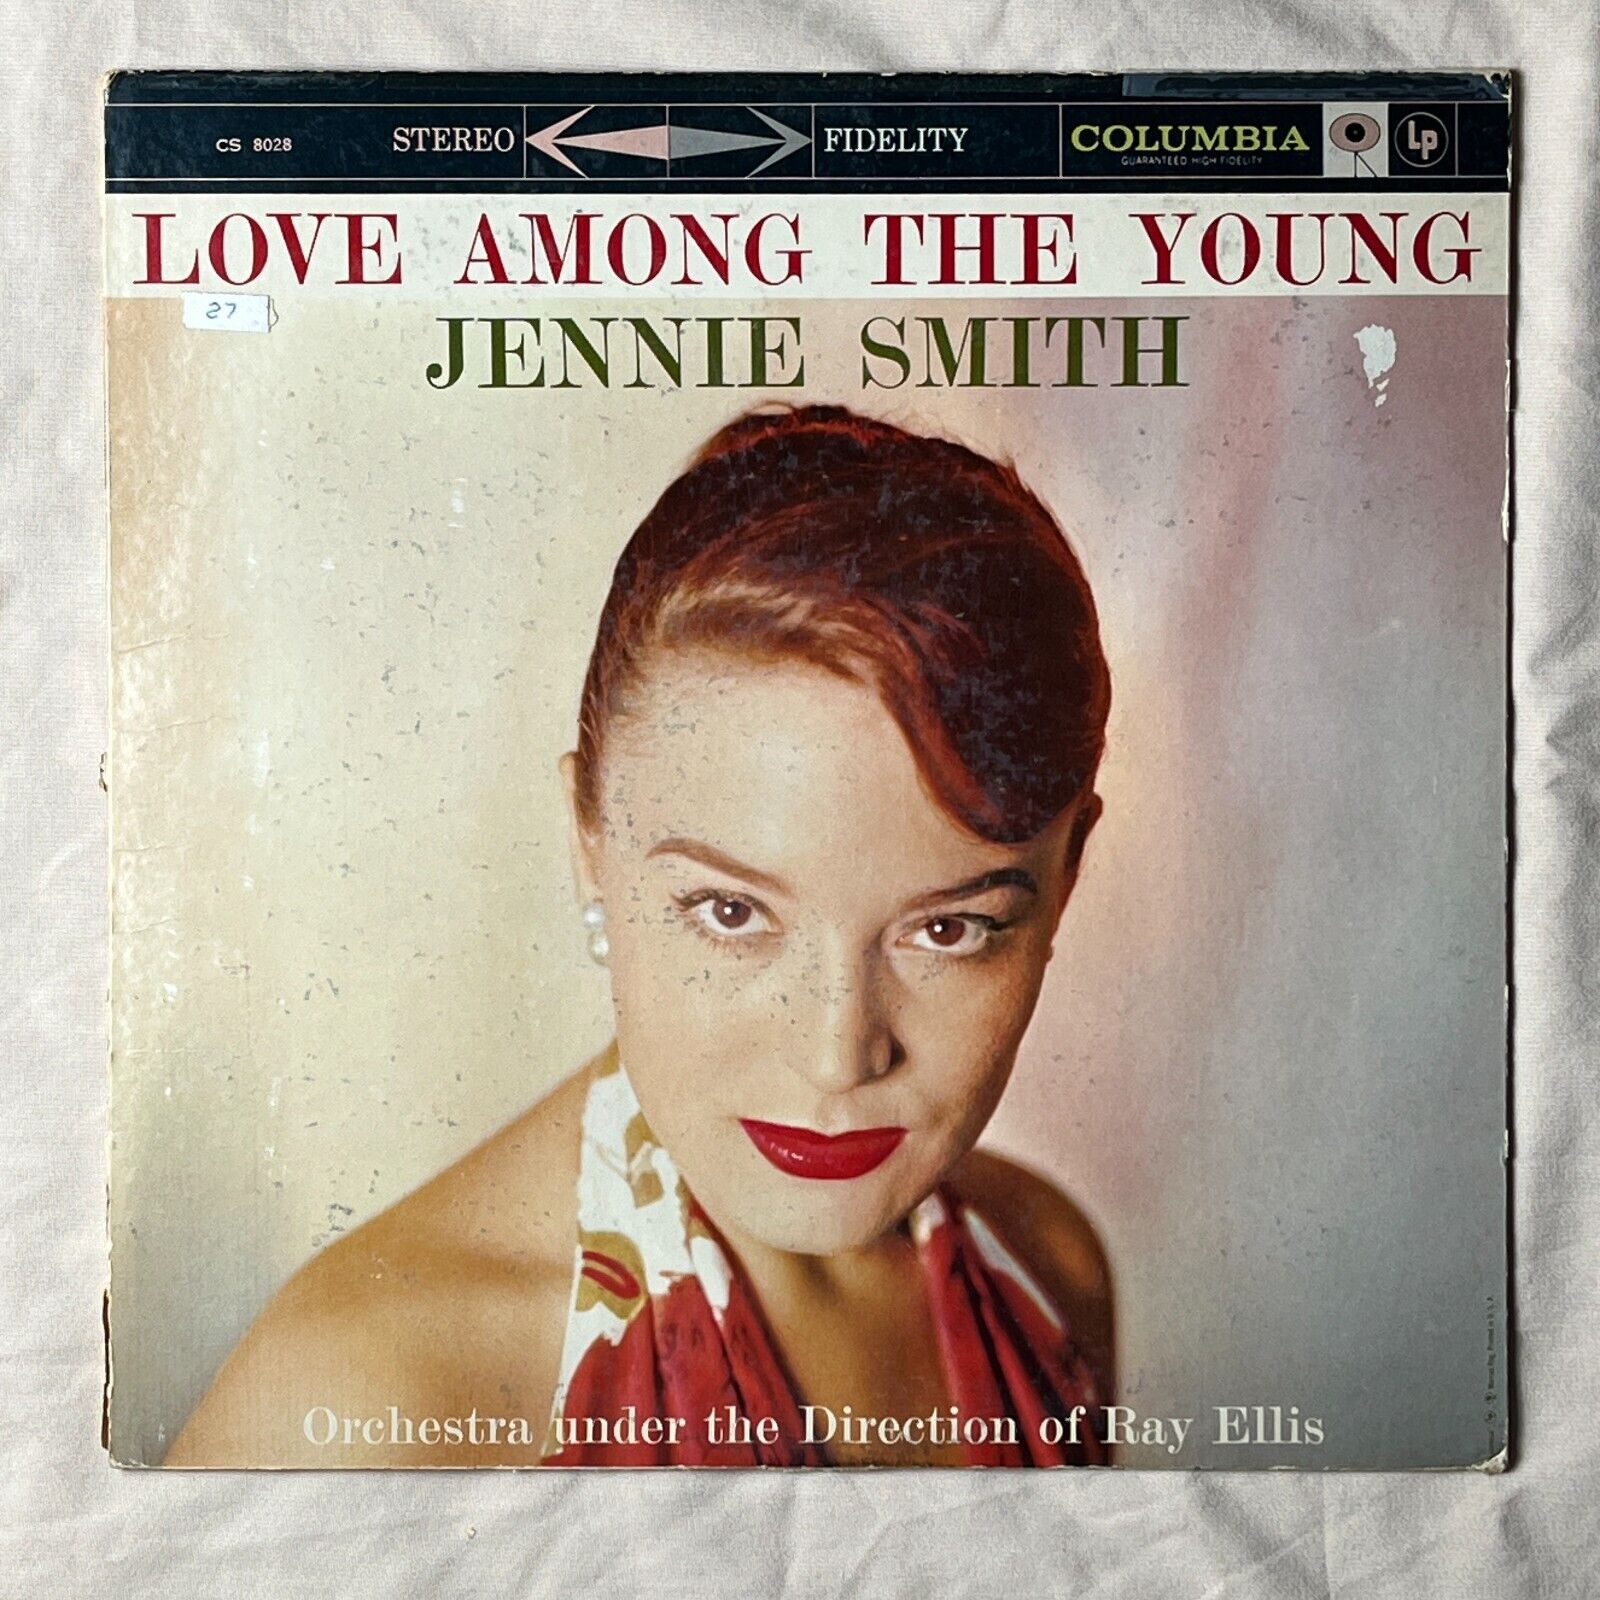 JENNIE SMITH Love Among The Young 1958 Vinyl LP Columbia CS 8028 - VG+